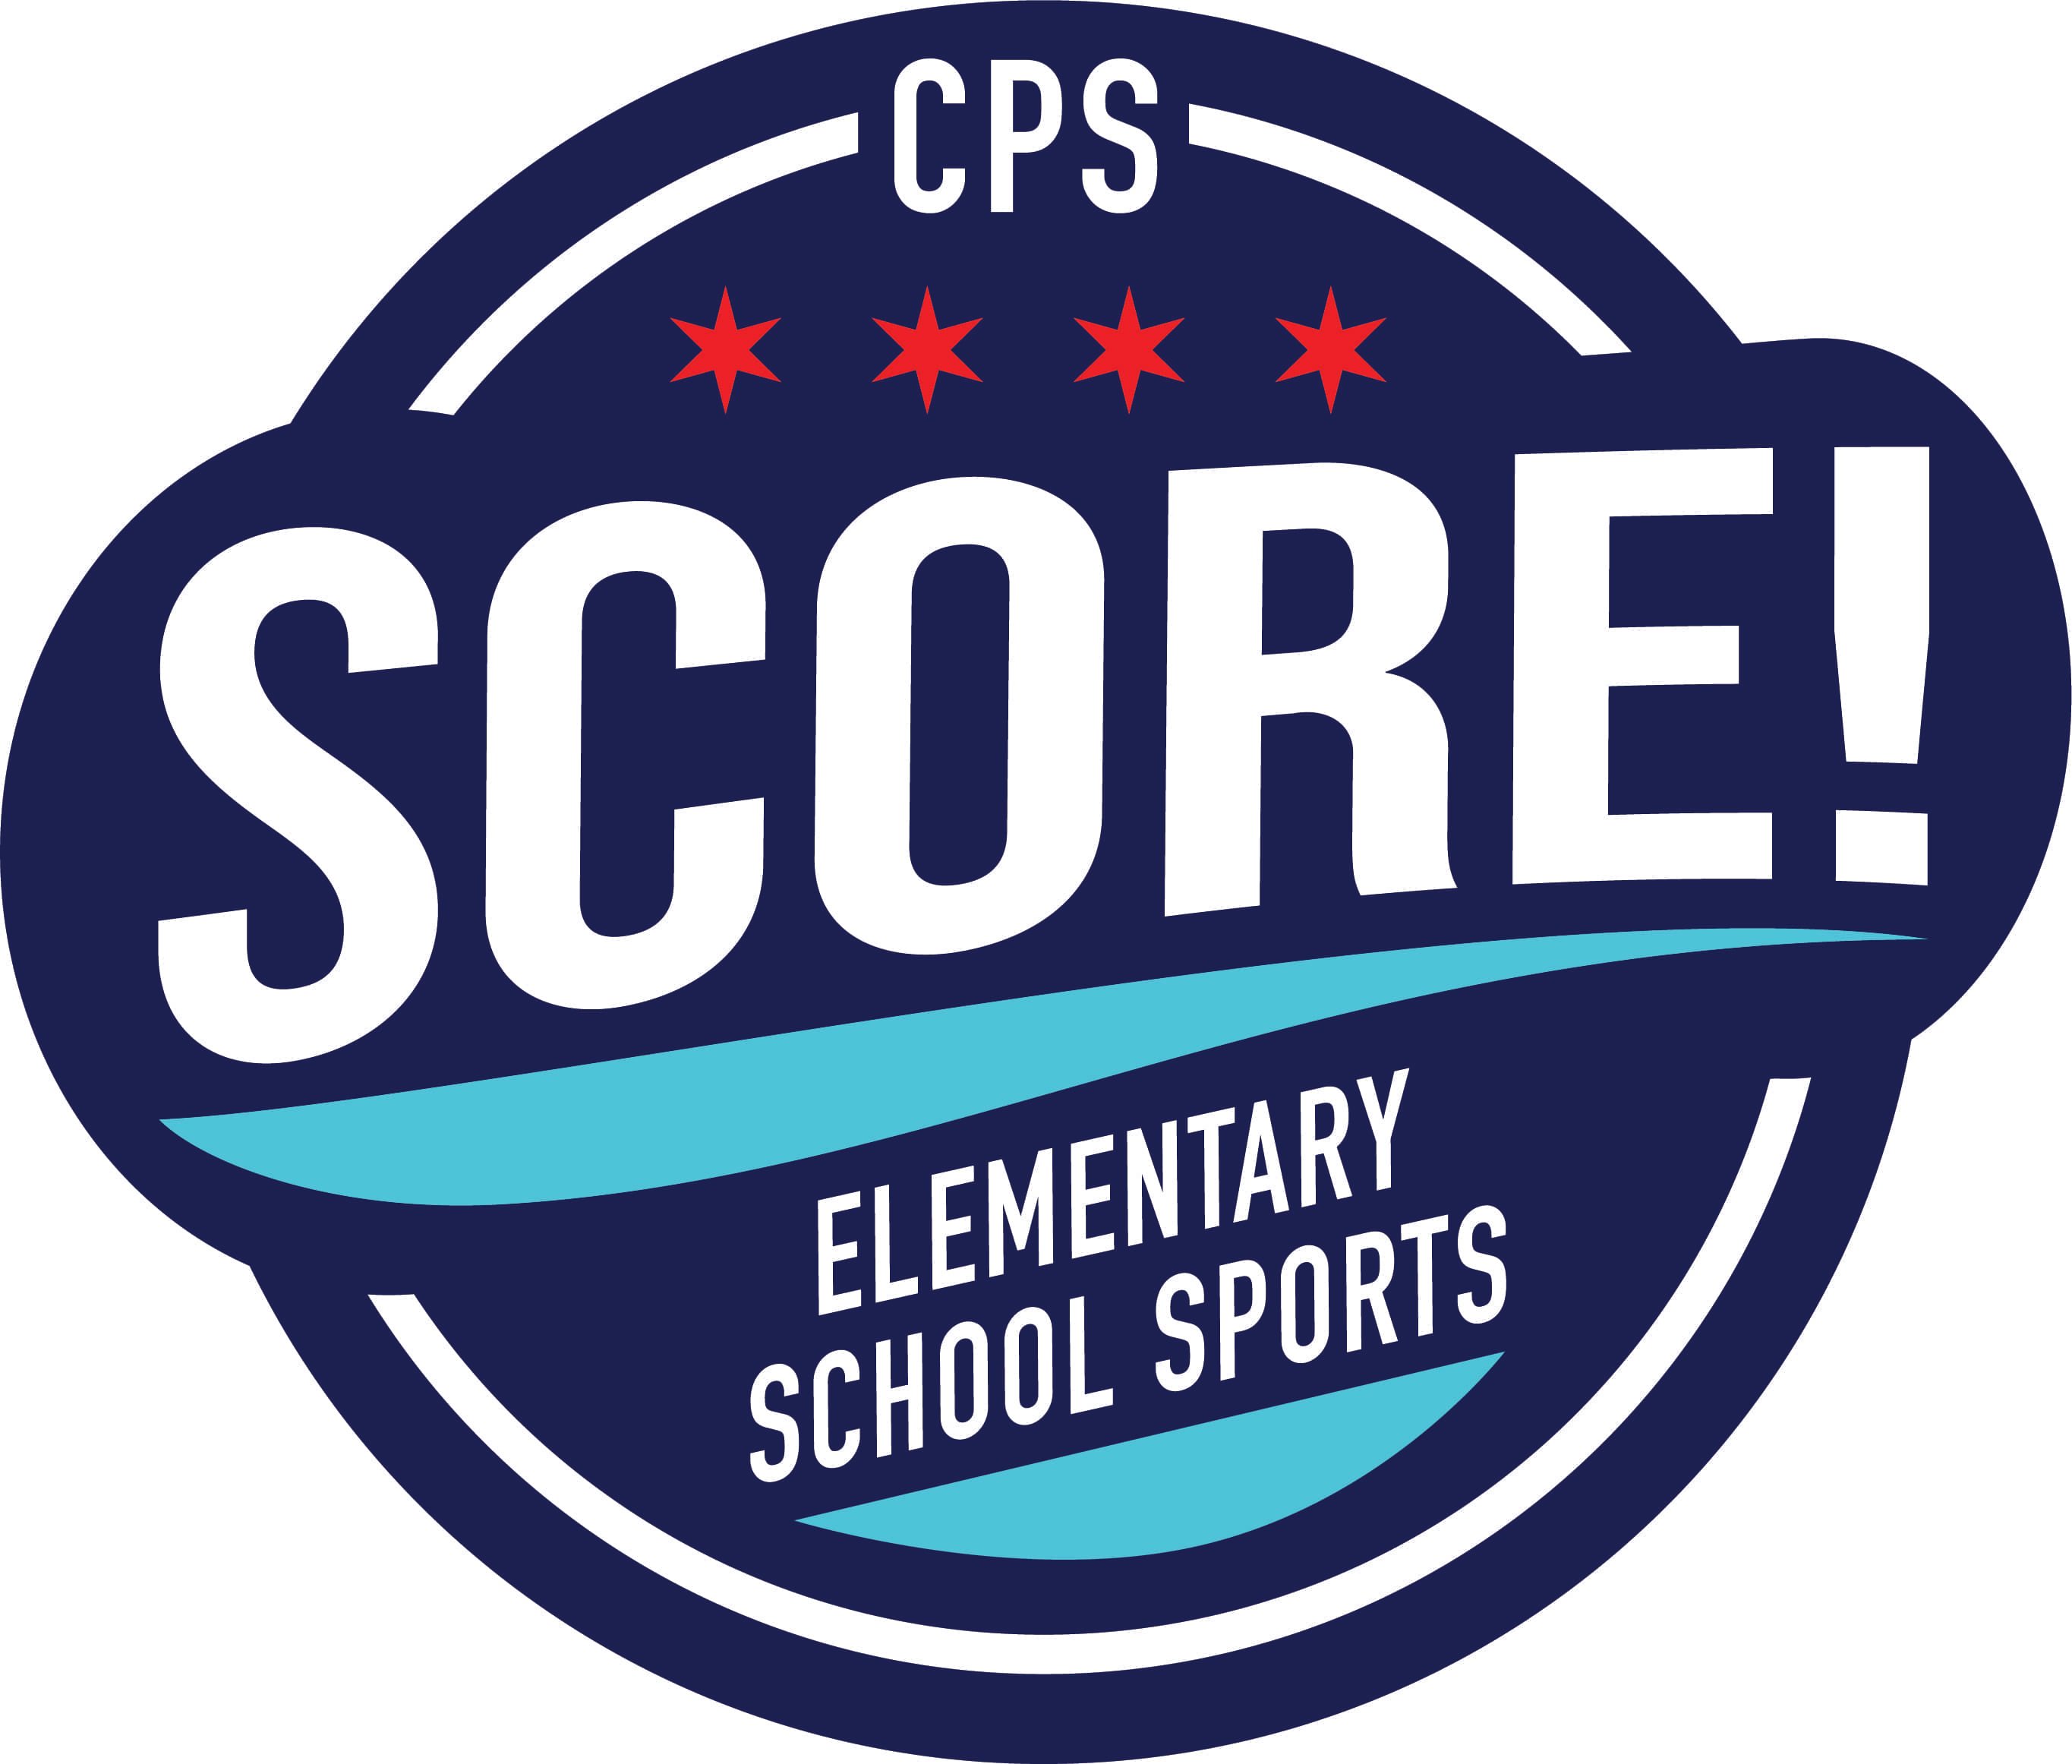 CPS Score! logo